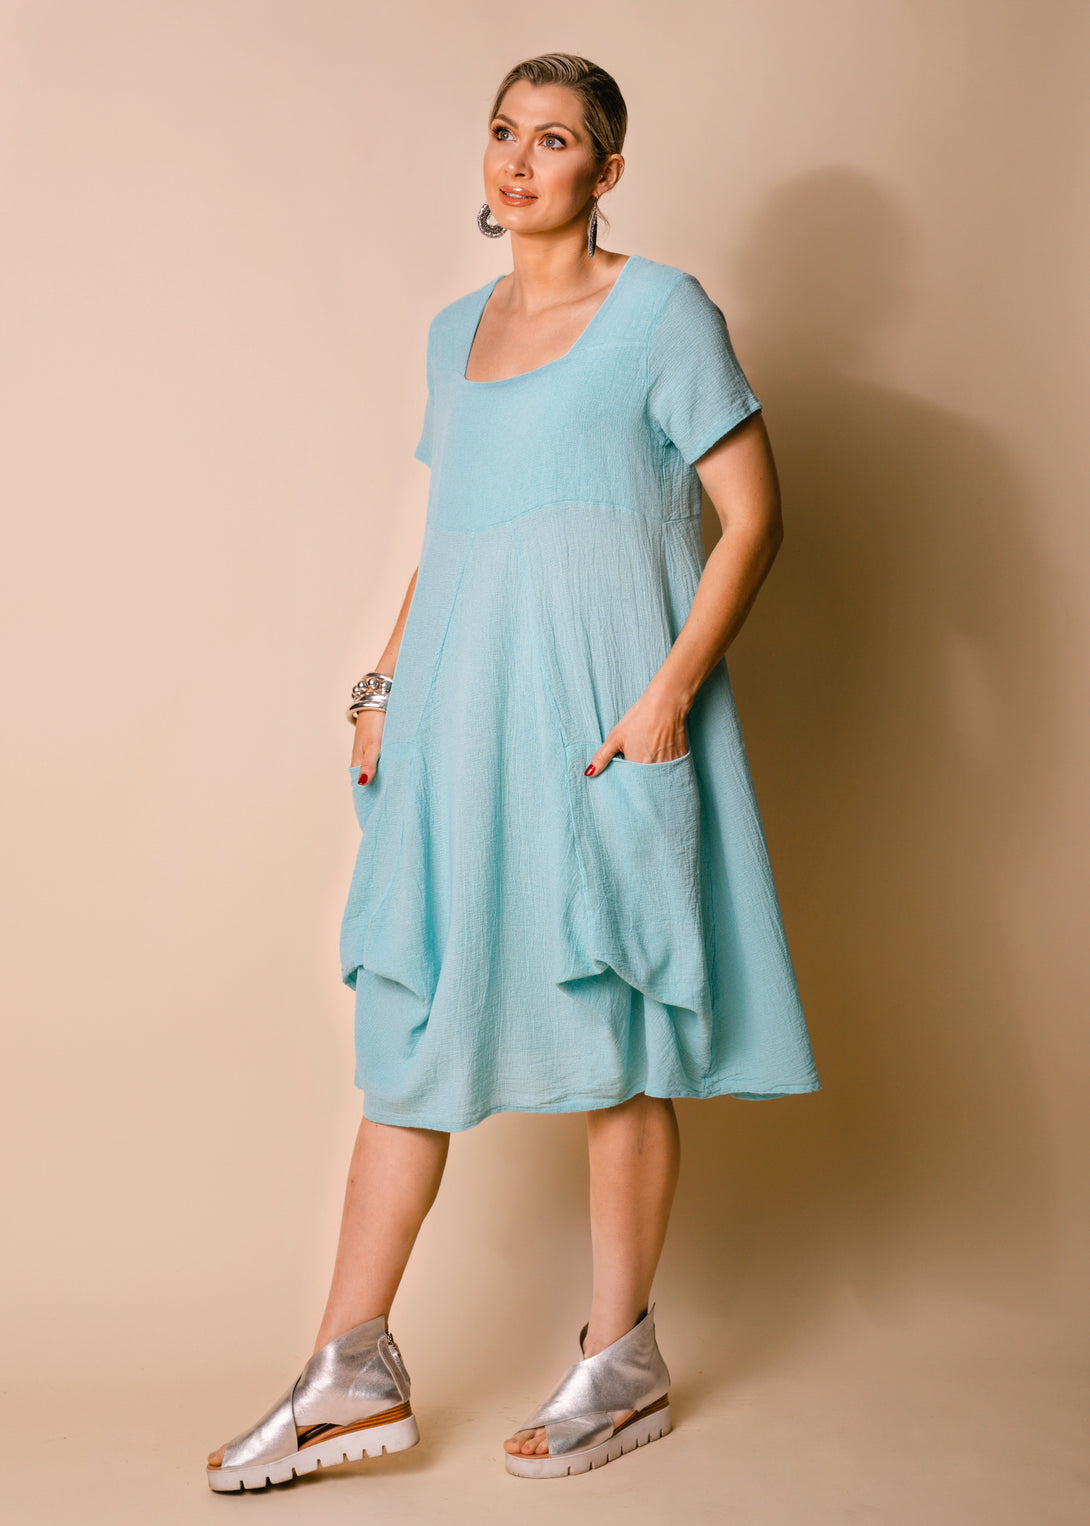 Britan Linen Blend Dress in Aqua Mist - Imagine Fashion